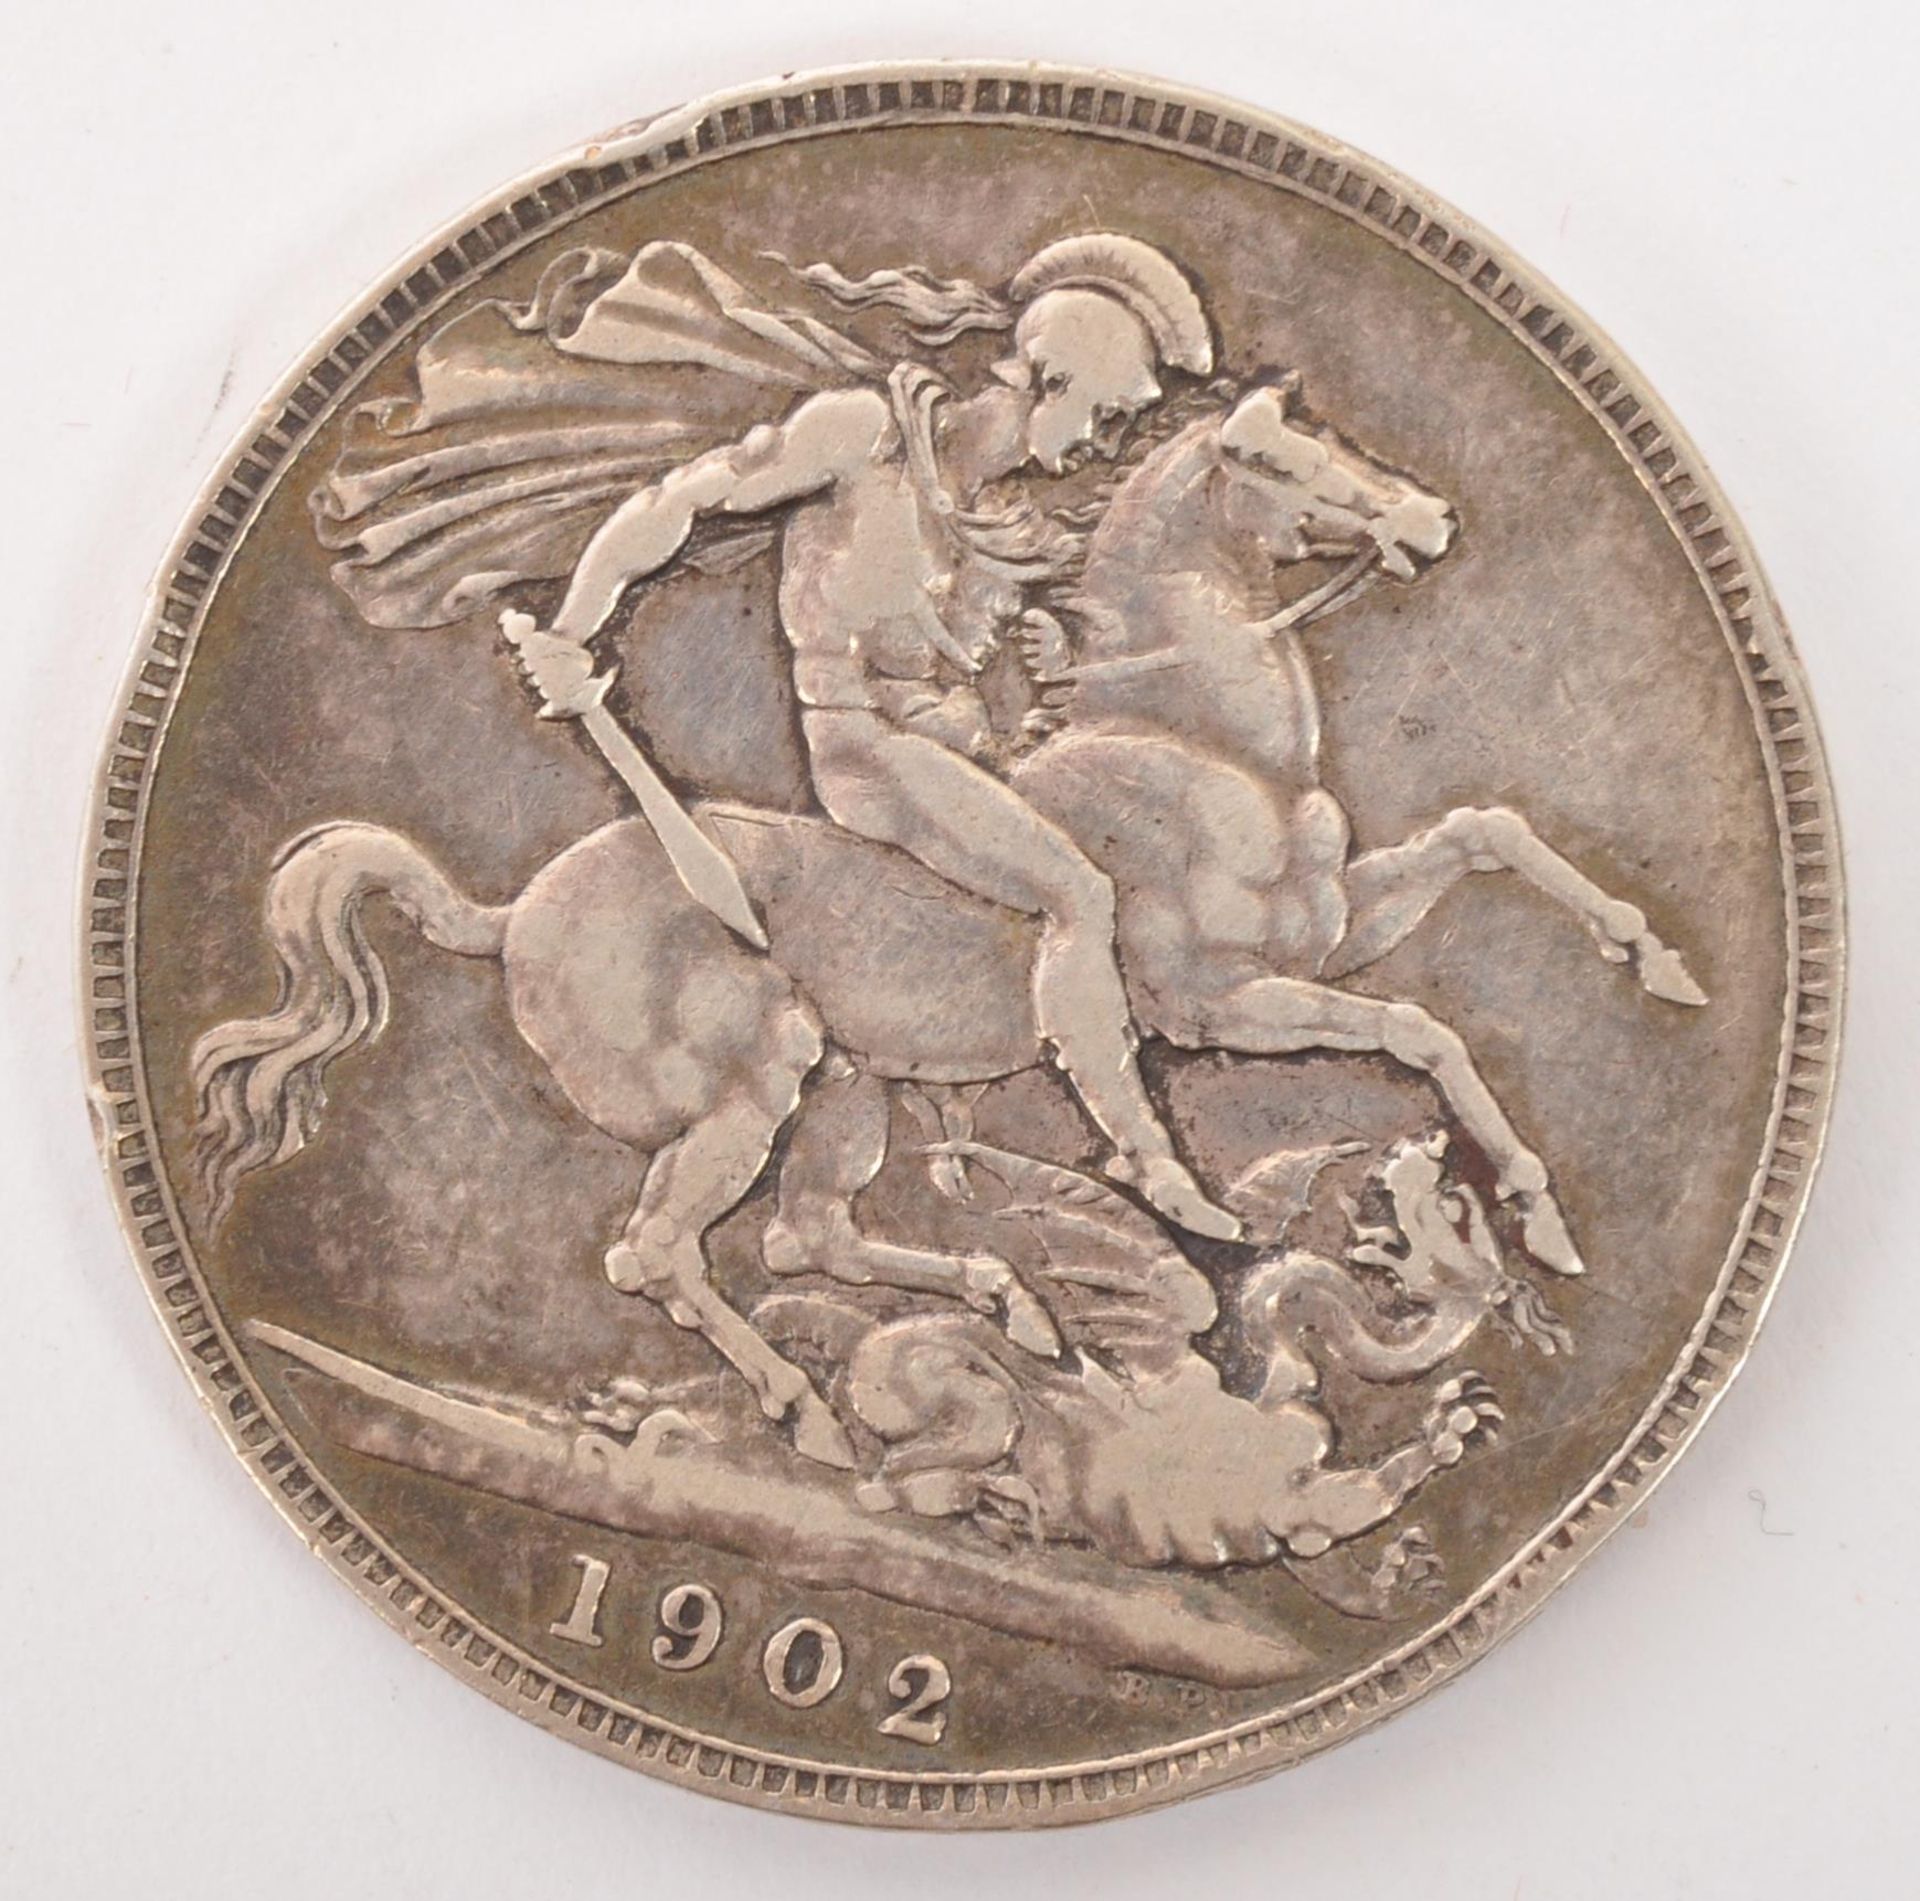 KING EDWARD IV 1902 925 SILVER CROWN COIN